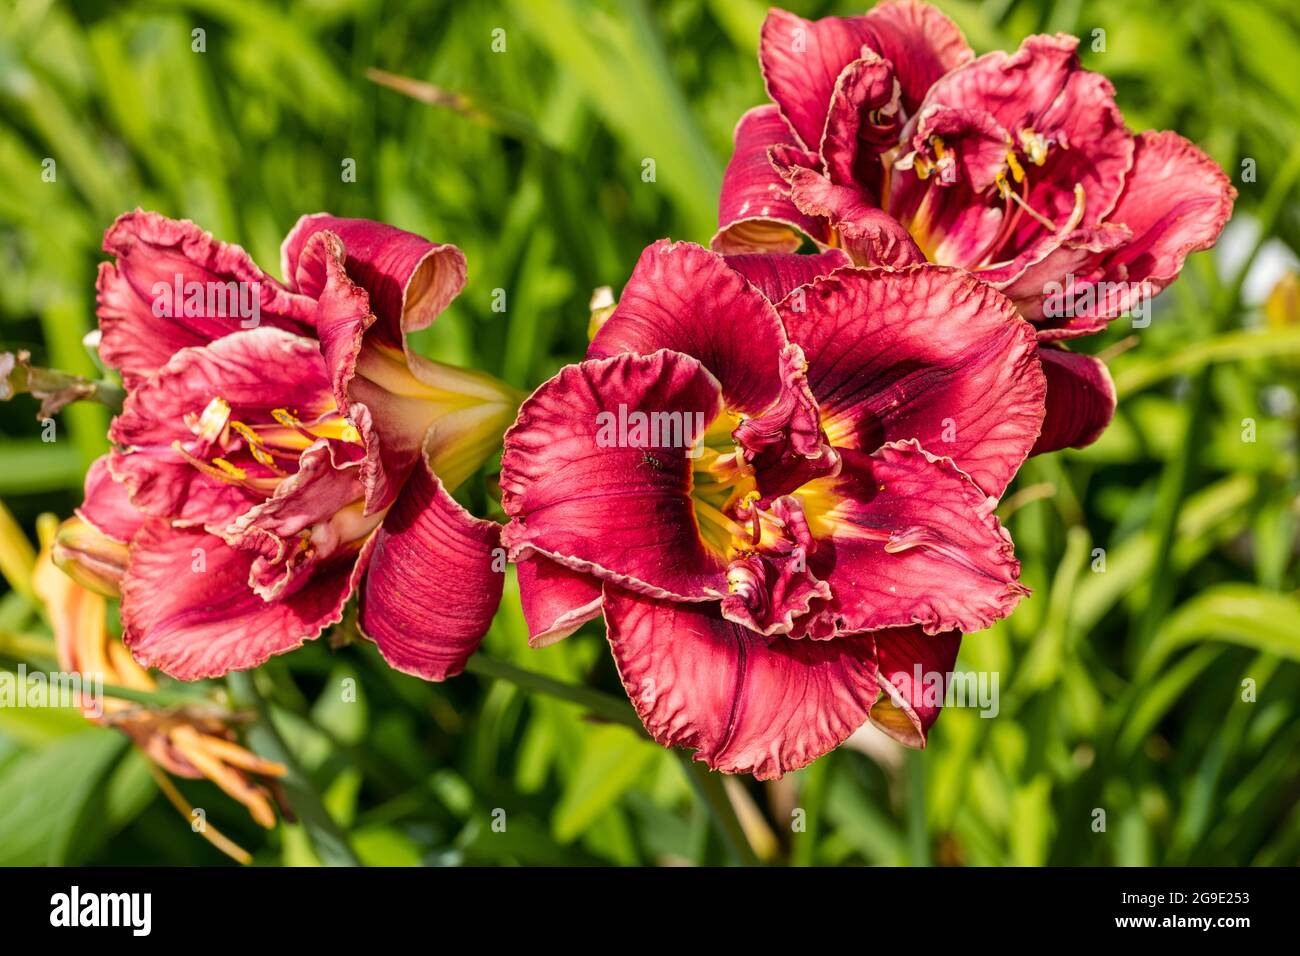 'Stellar Double Rose' Daylily, Daglilja (Hemerocallis) Stock Photo